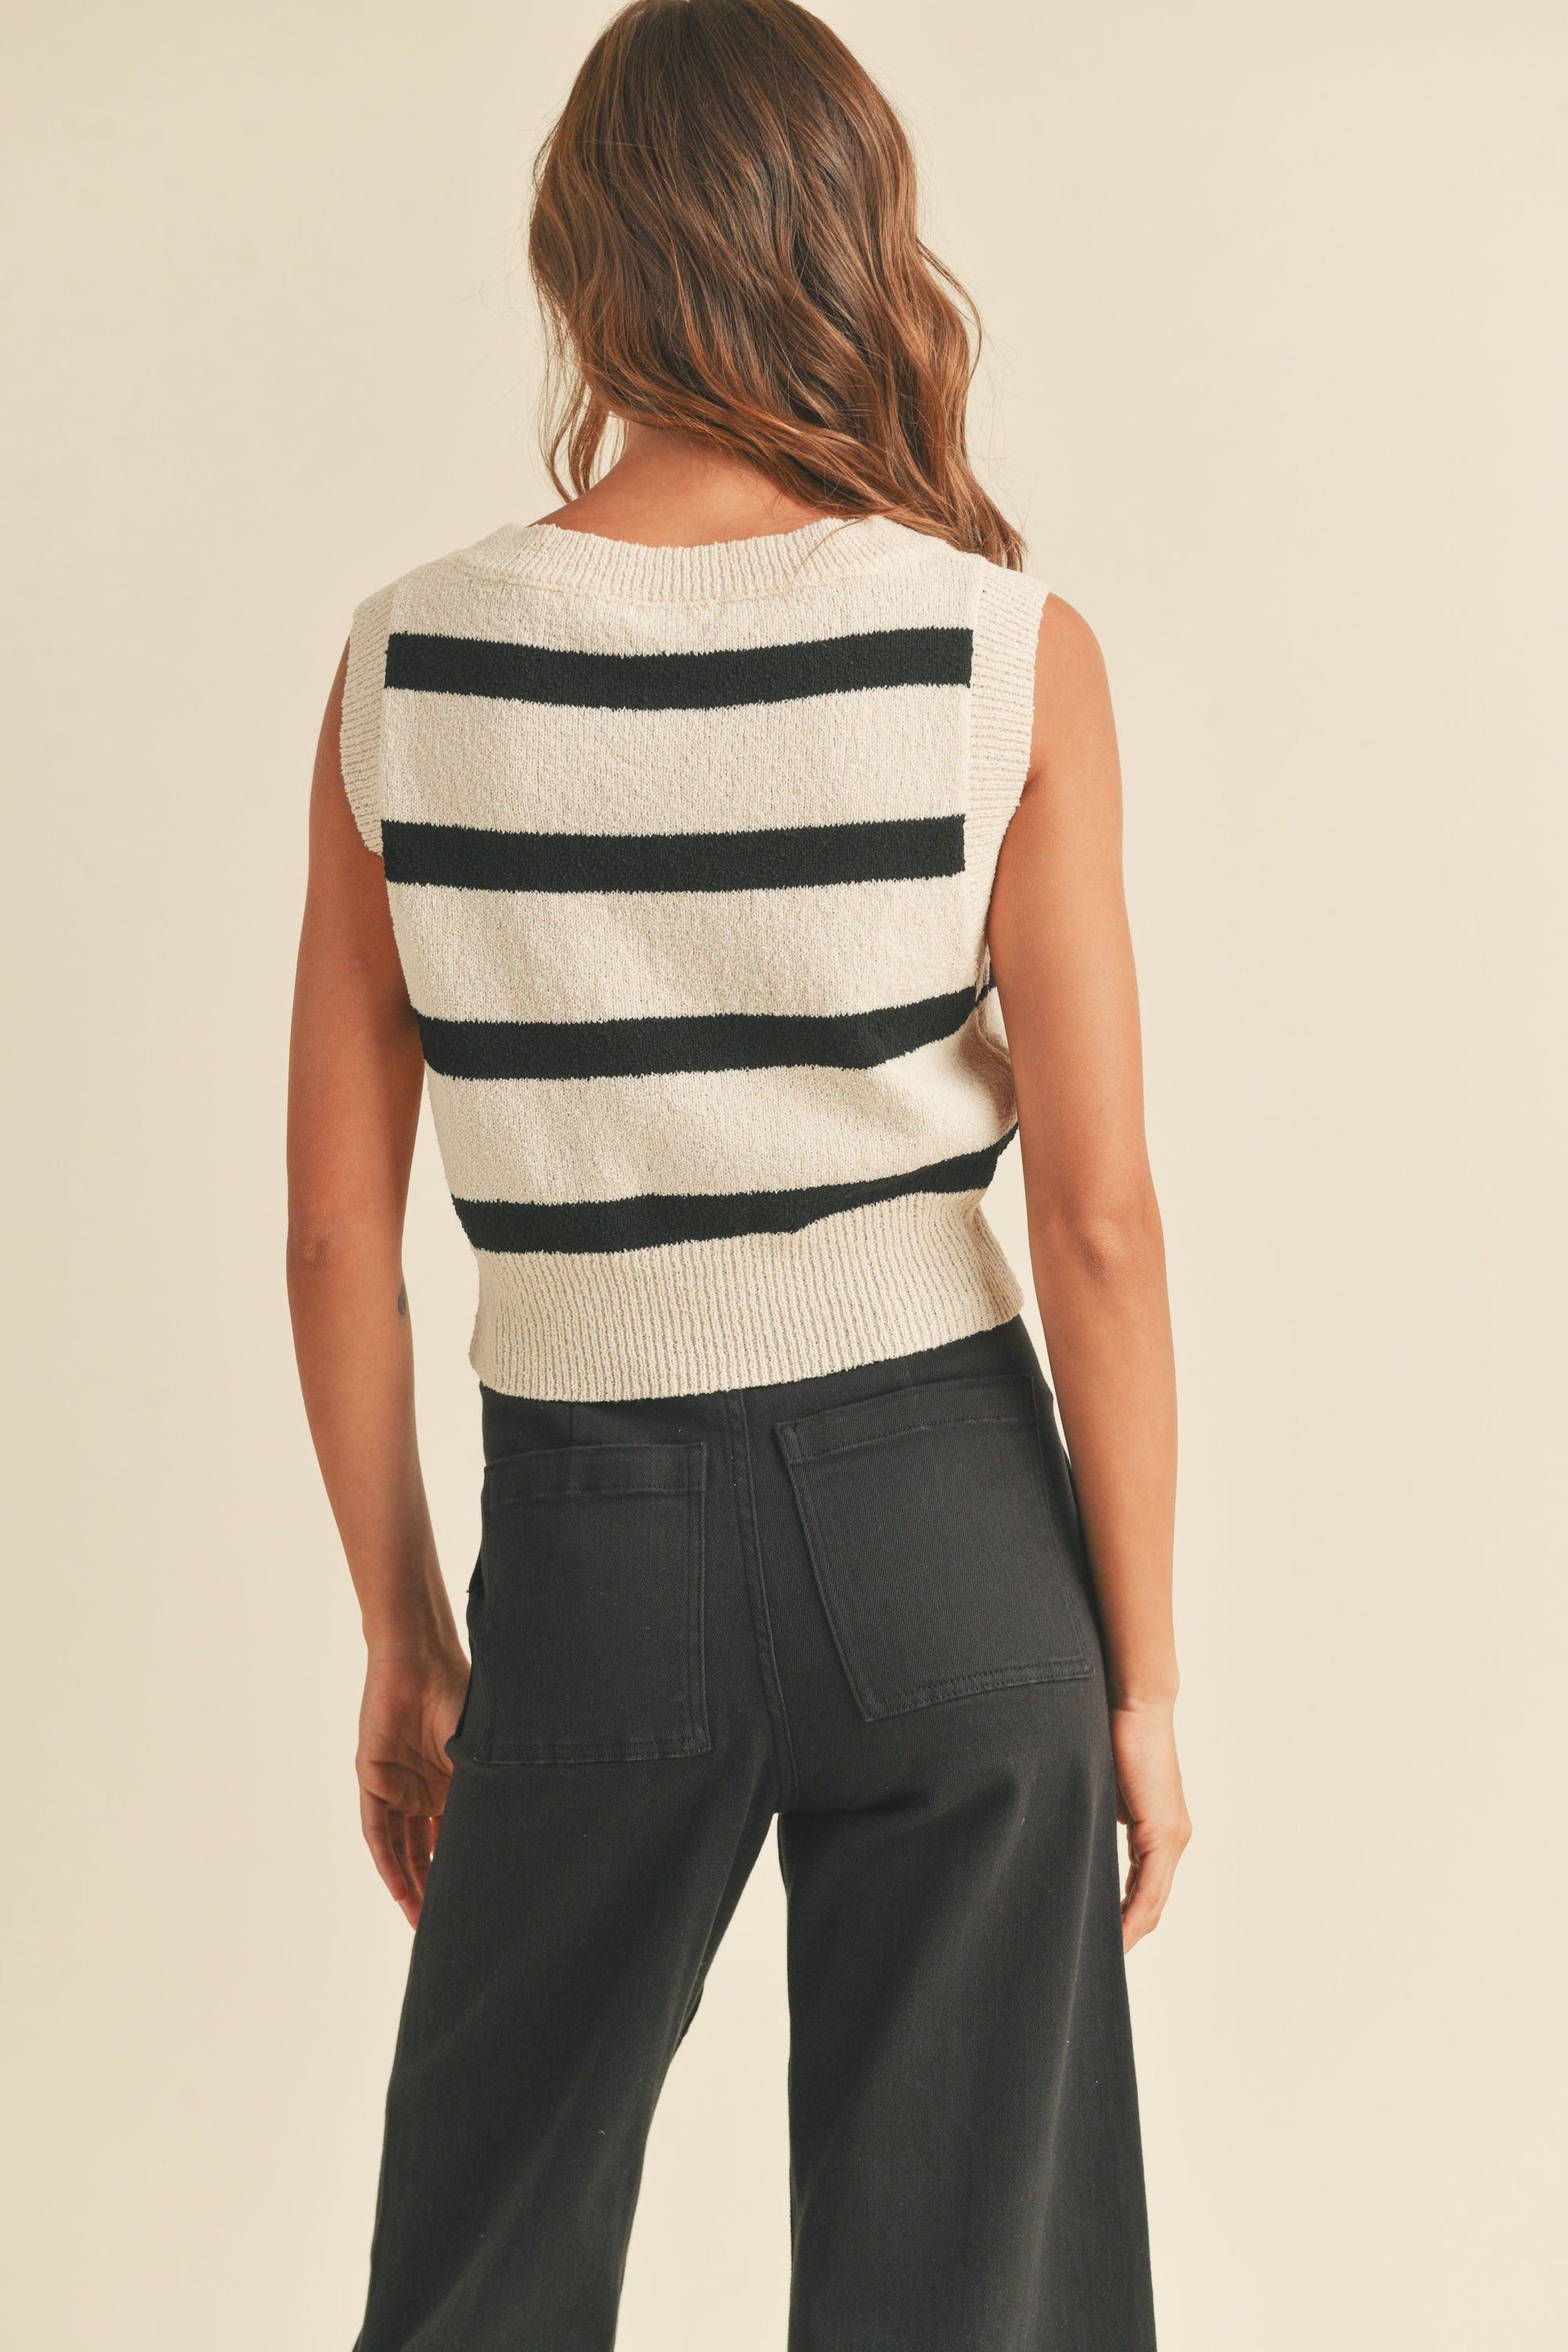 Striped Knit Vest - Cream & Black.  Back view.